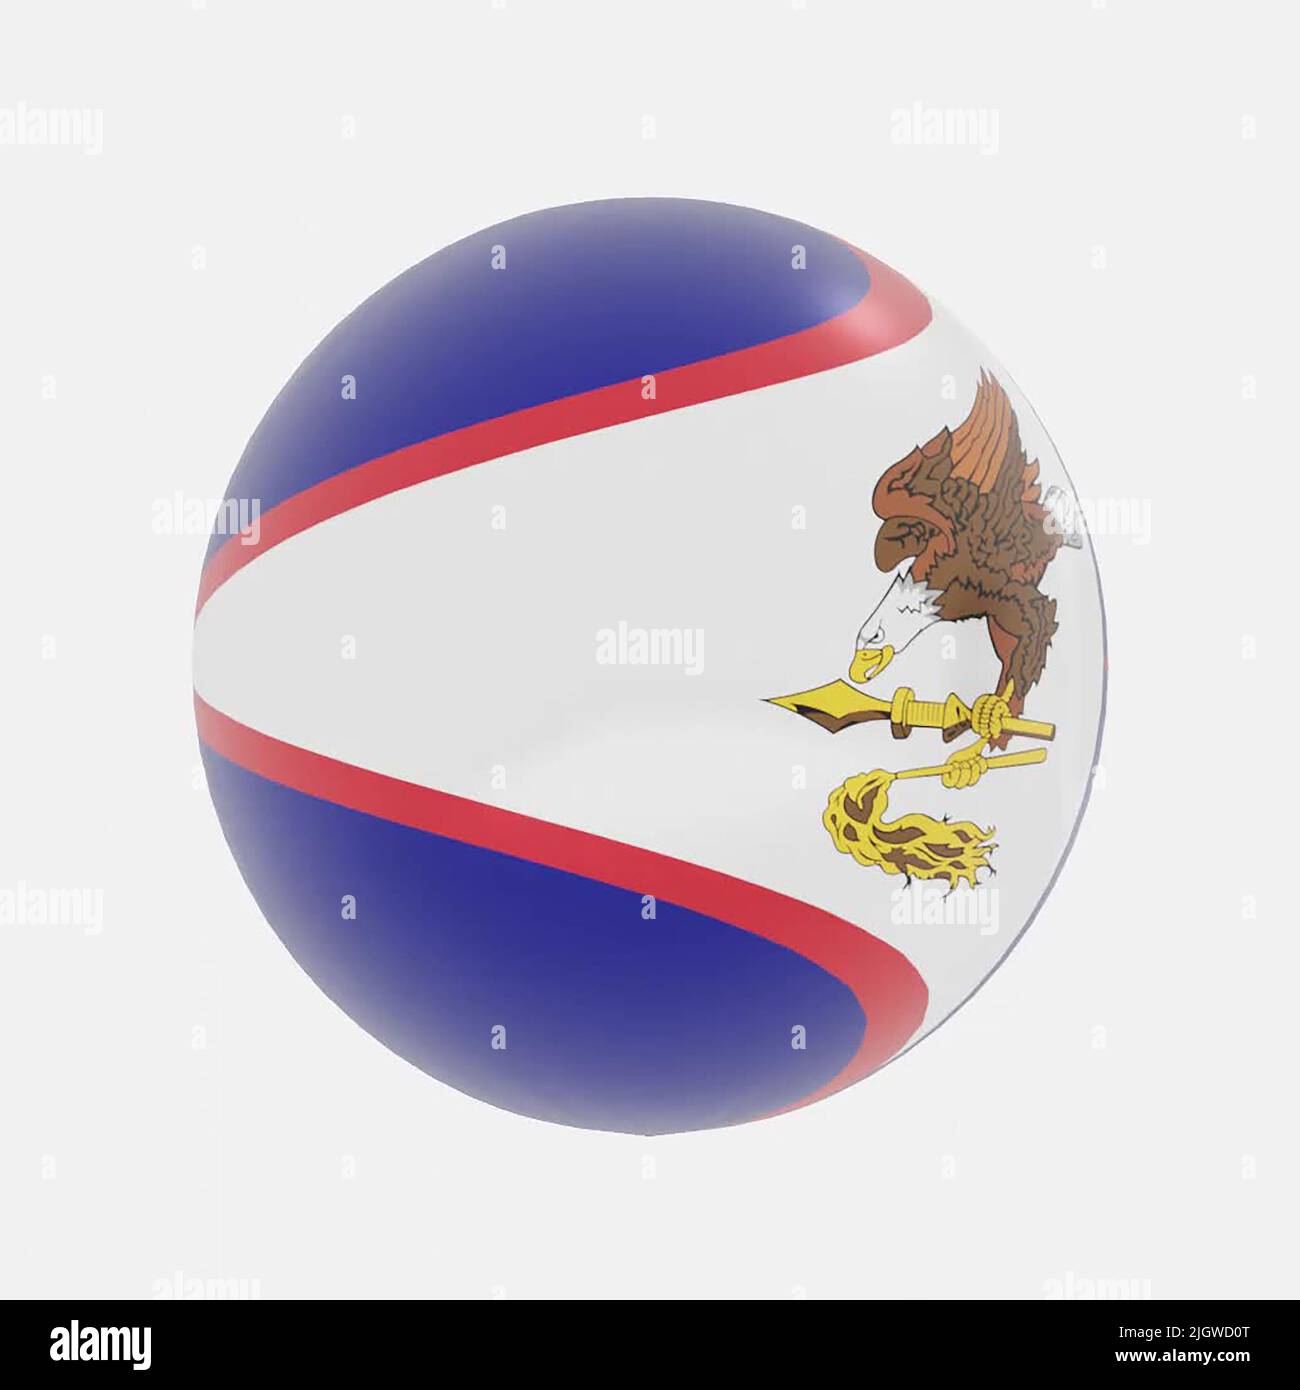 3d render of globe in American Samoa flag for icon or symbol. Stock Photo